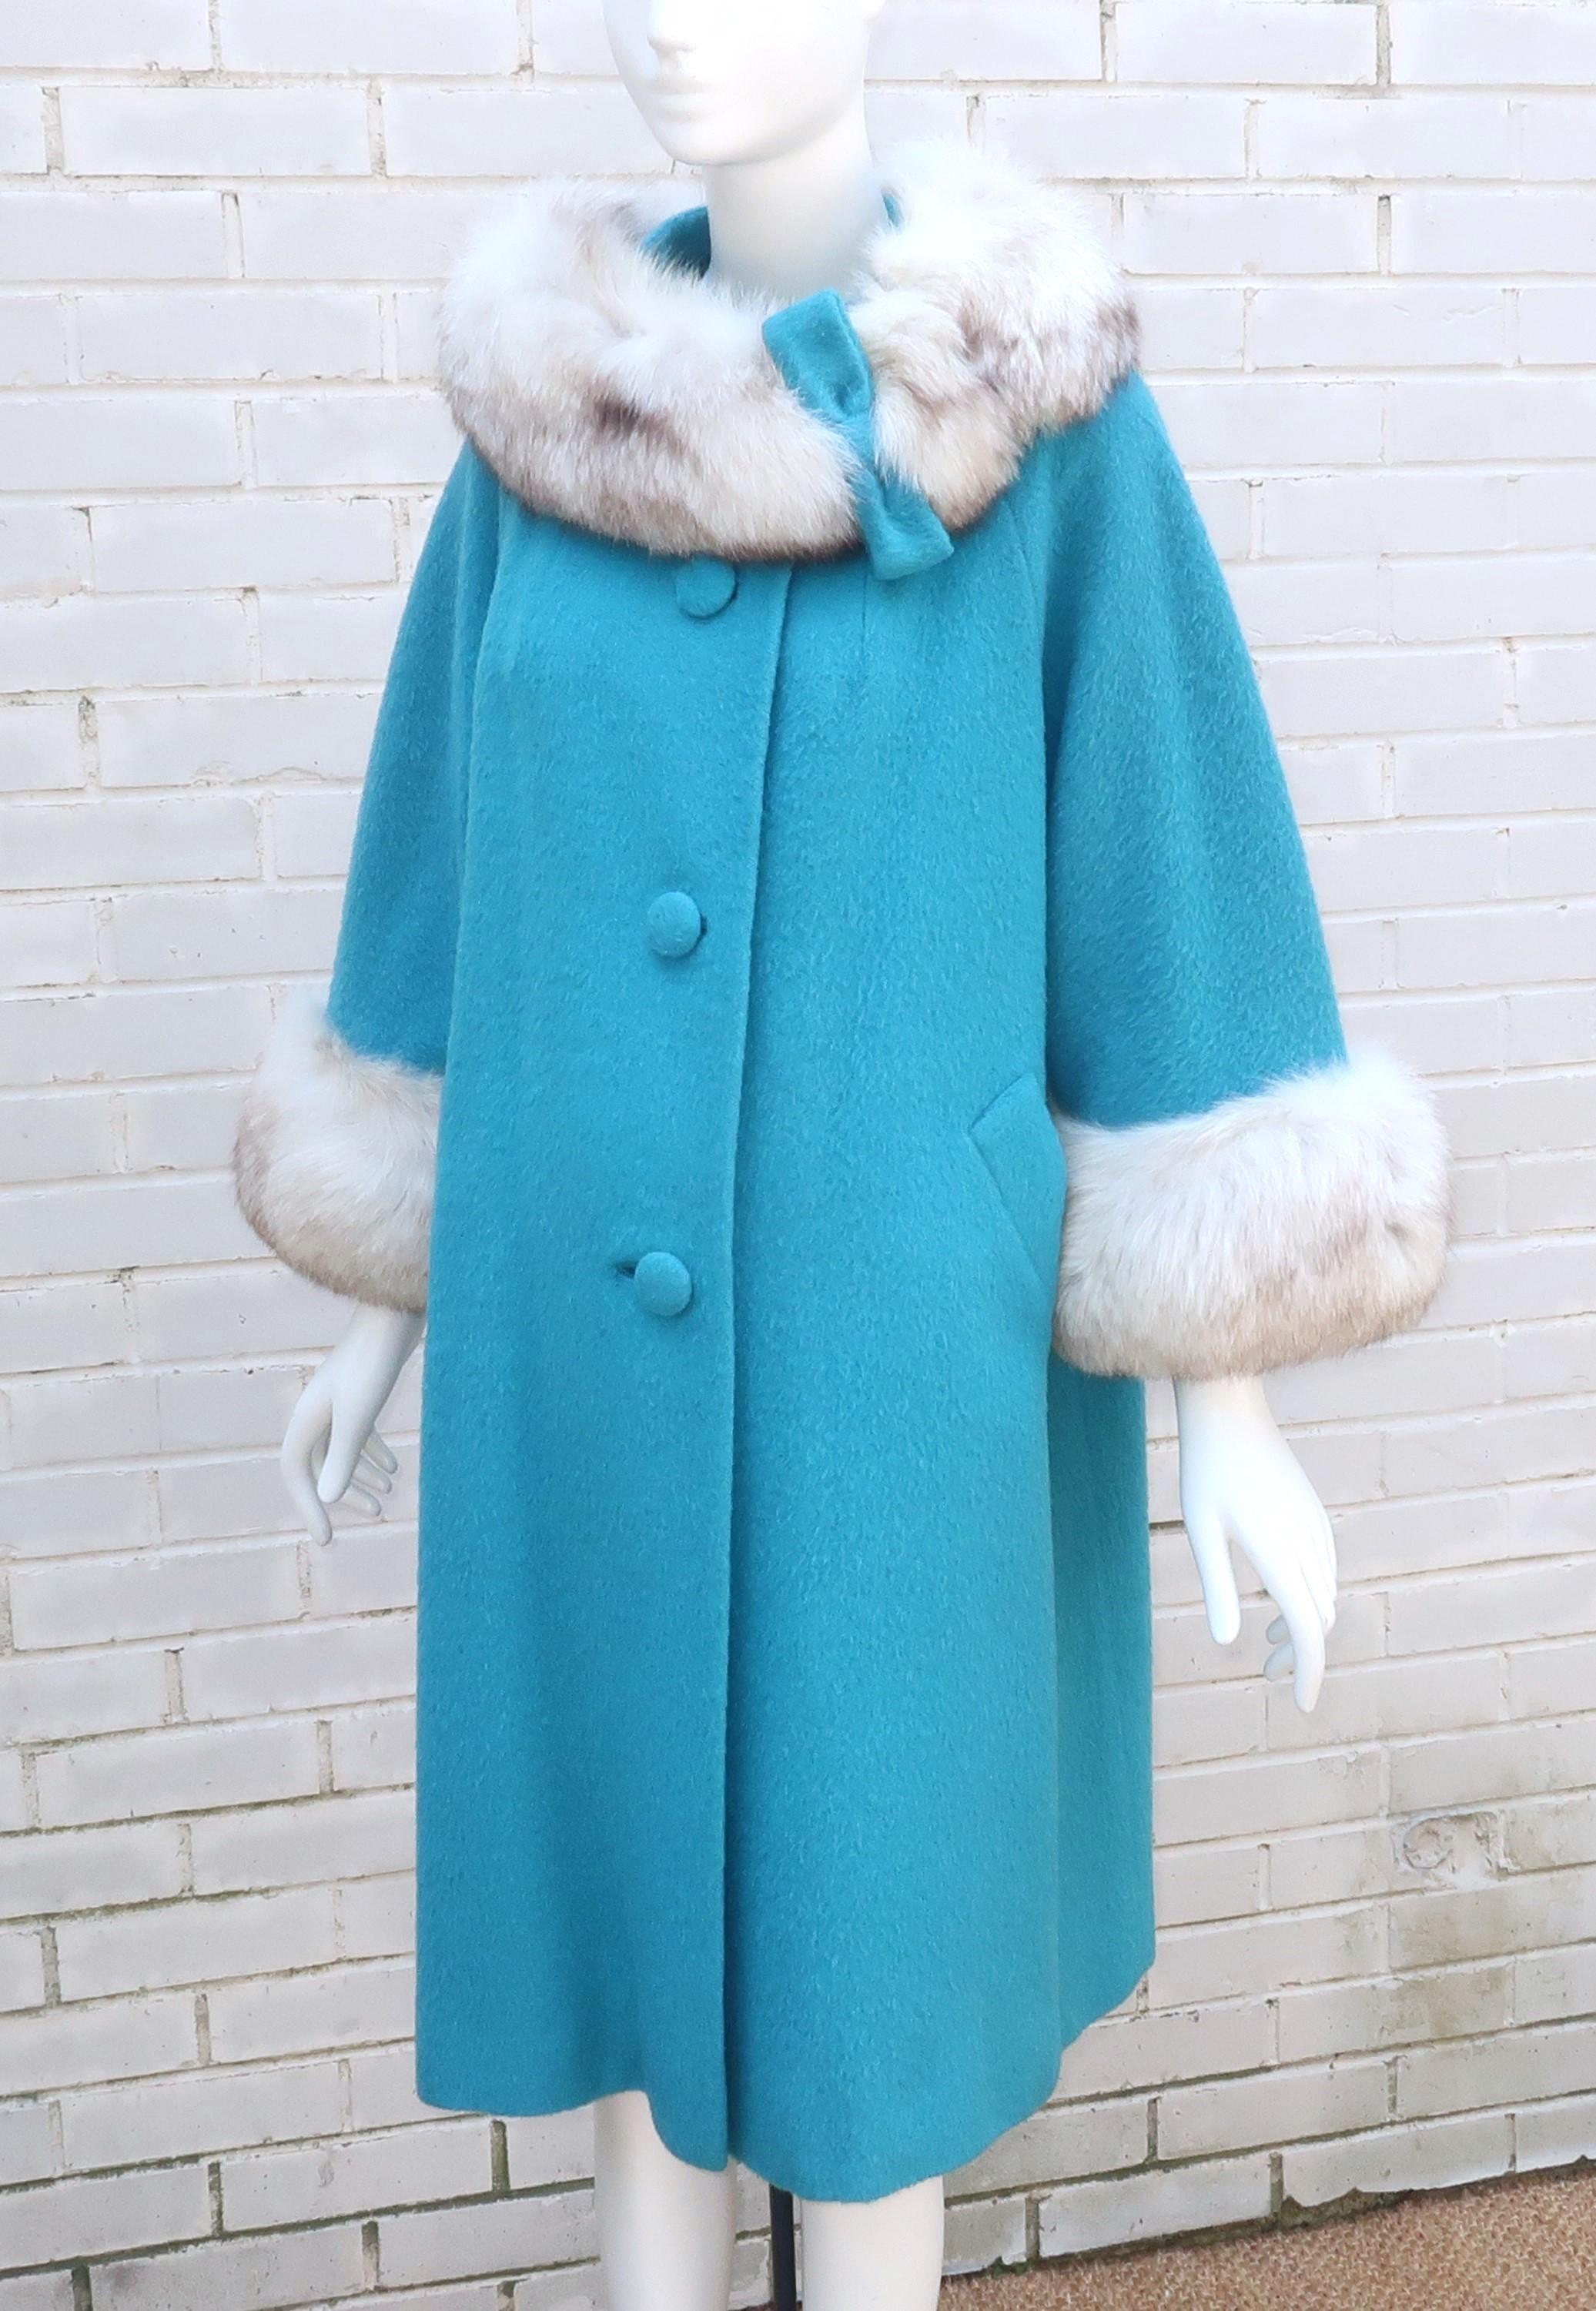 Lilli Ann Aqua Blue Coat With Fox Fur Trim, C.1960 5